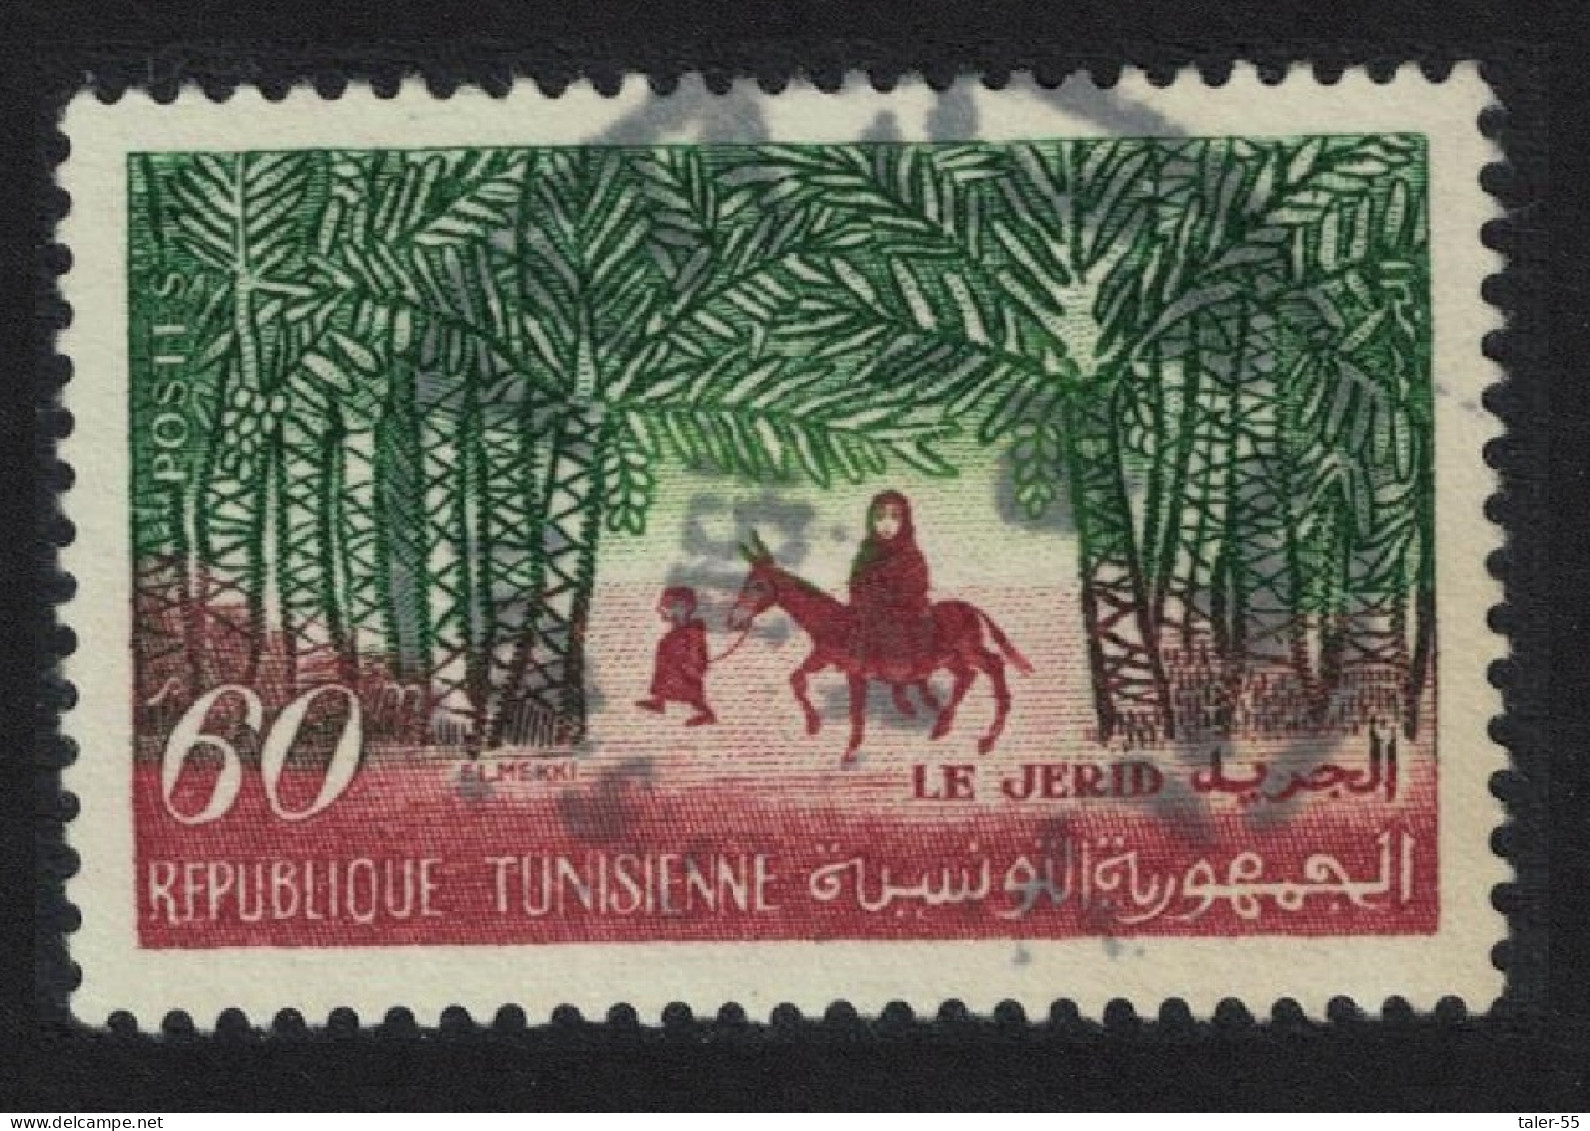 Tunisia Le Jerid 60m 1959 Canc SG#497 MI#535 Sc#357 - Tunesien (1956-...)